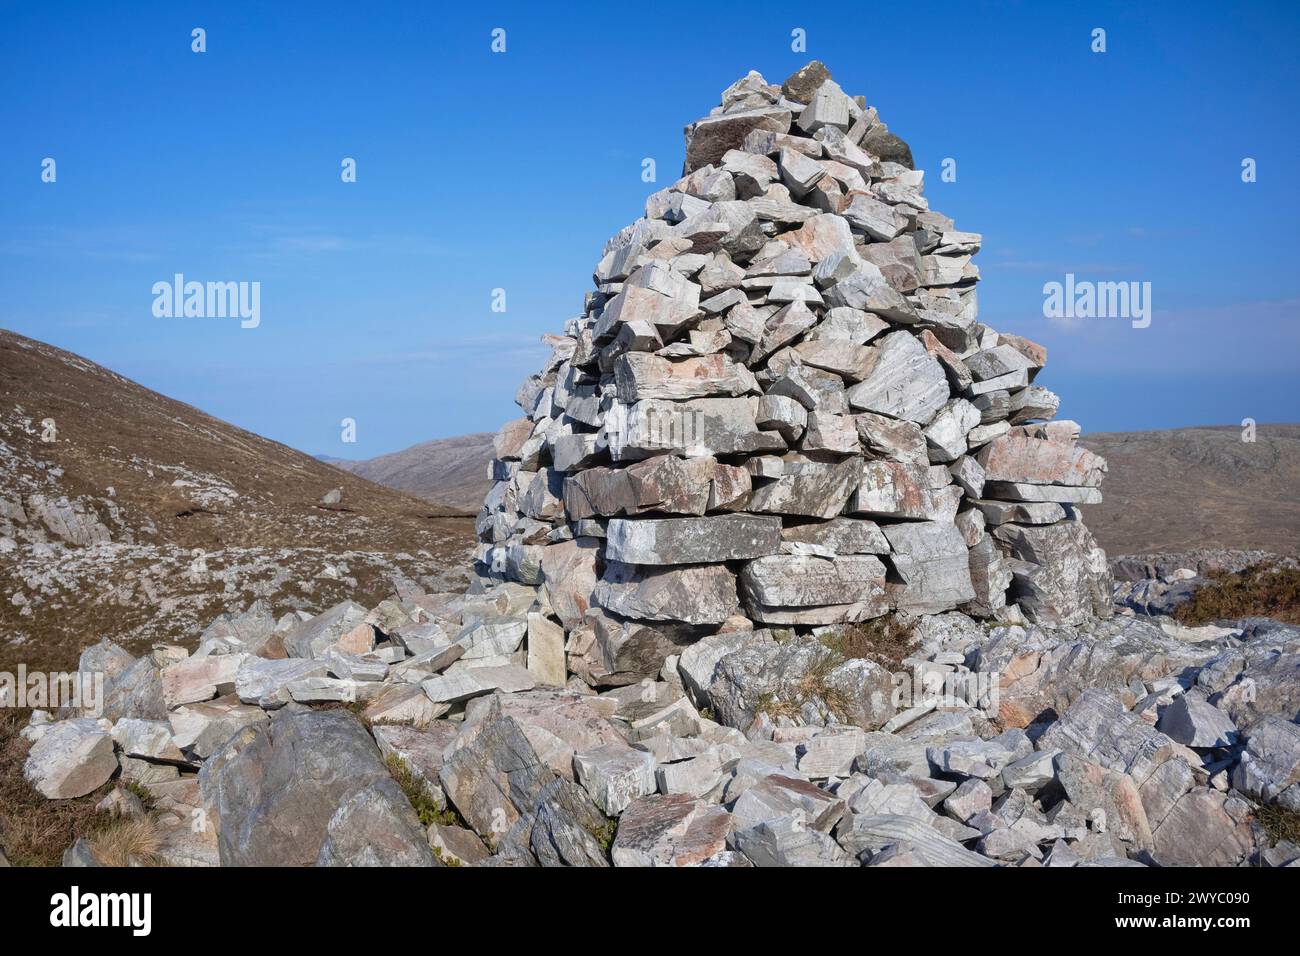 Republik Irland, County Donegal, Gweedore, Mini-Cairn am Fuße des Errigal, dem höchsten Berg Donegals. Stockfoto